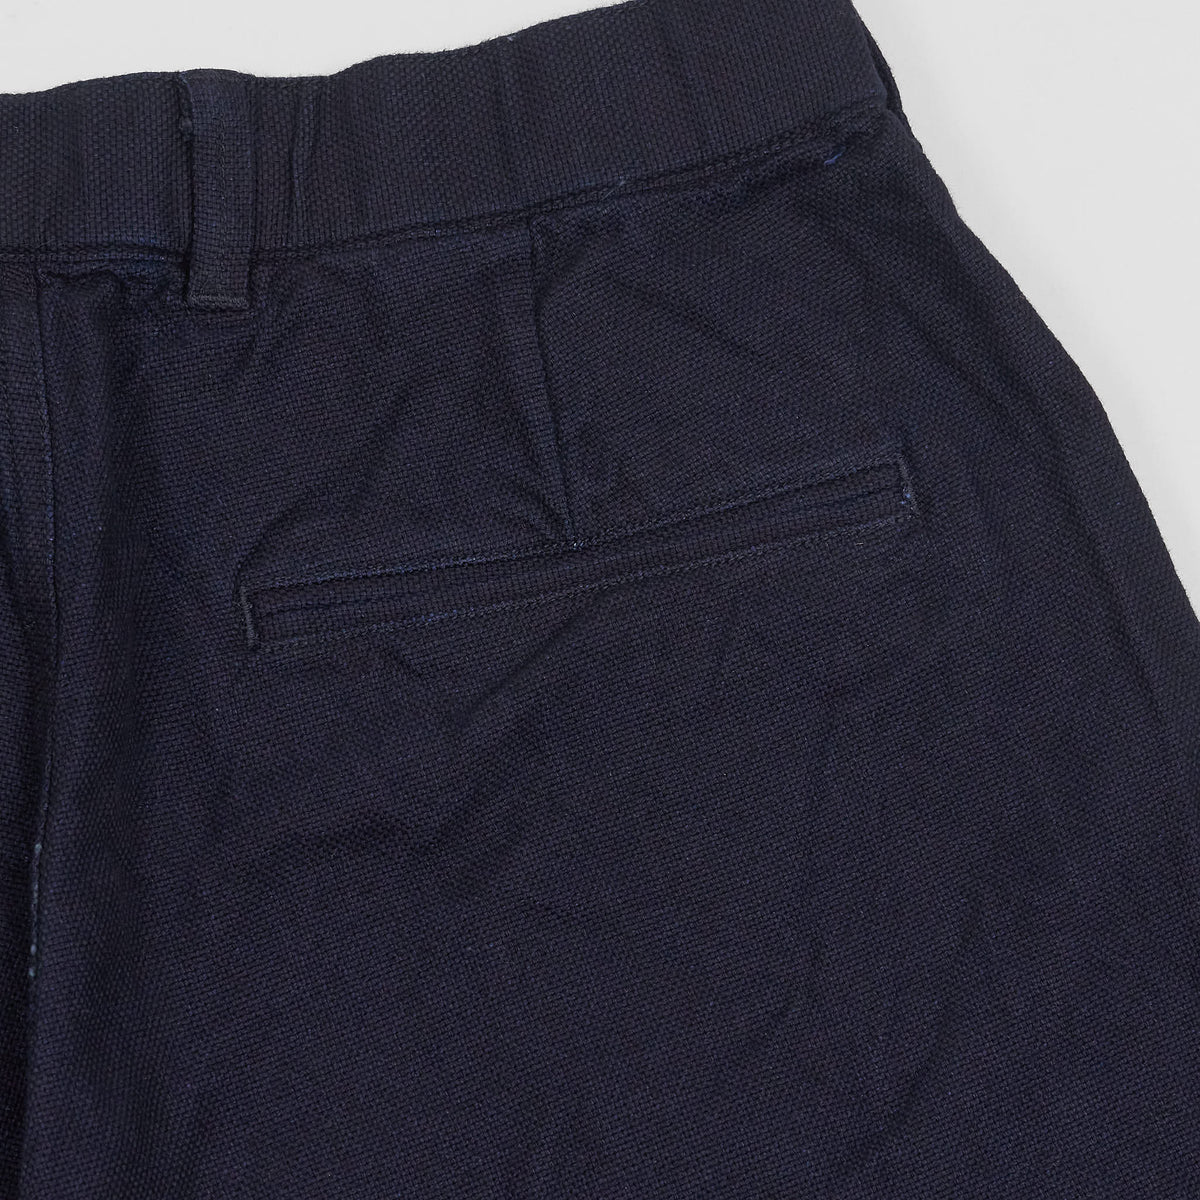 Samurai Jeans Sashiko Indigo Dyed Bermuda Shorts